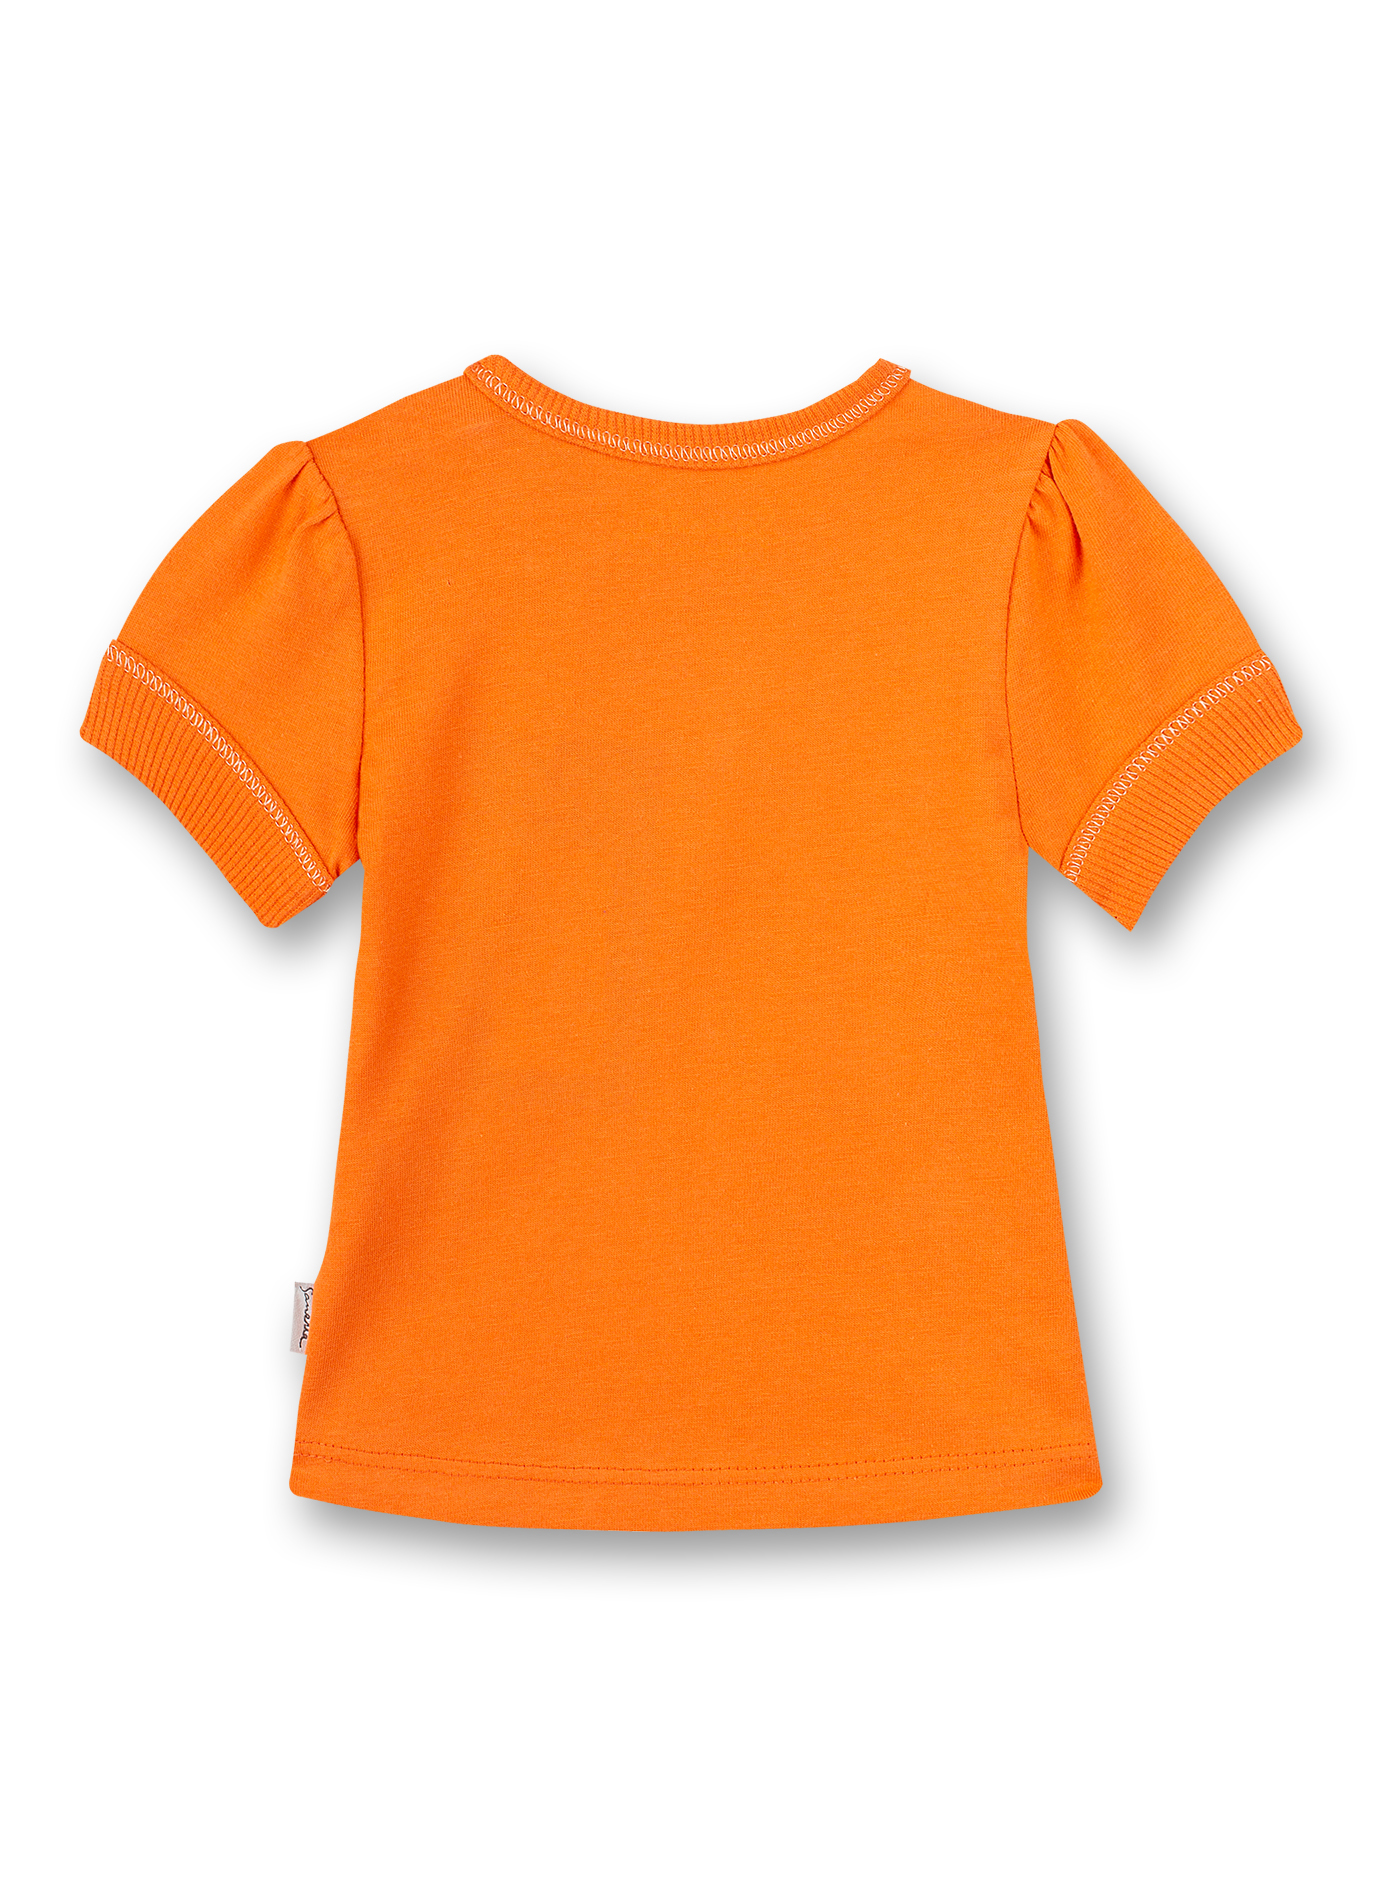 Mädchen T-Shirt Orange Kangaroo